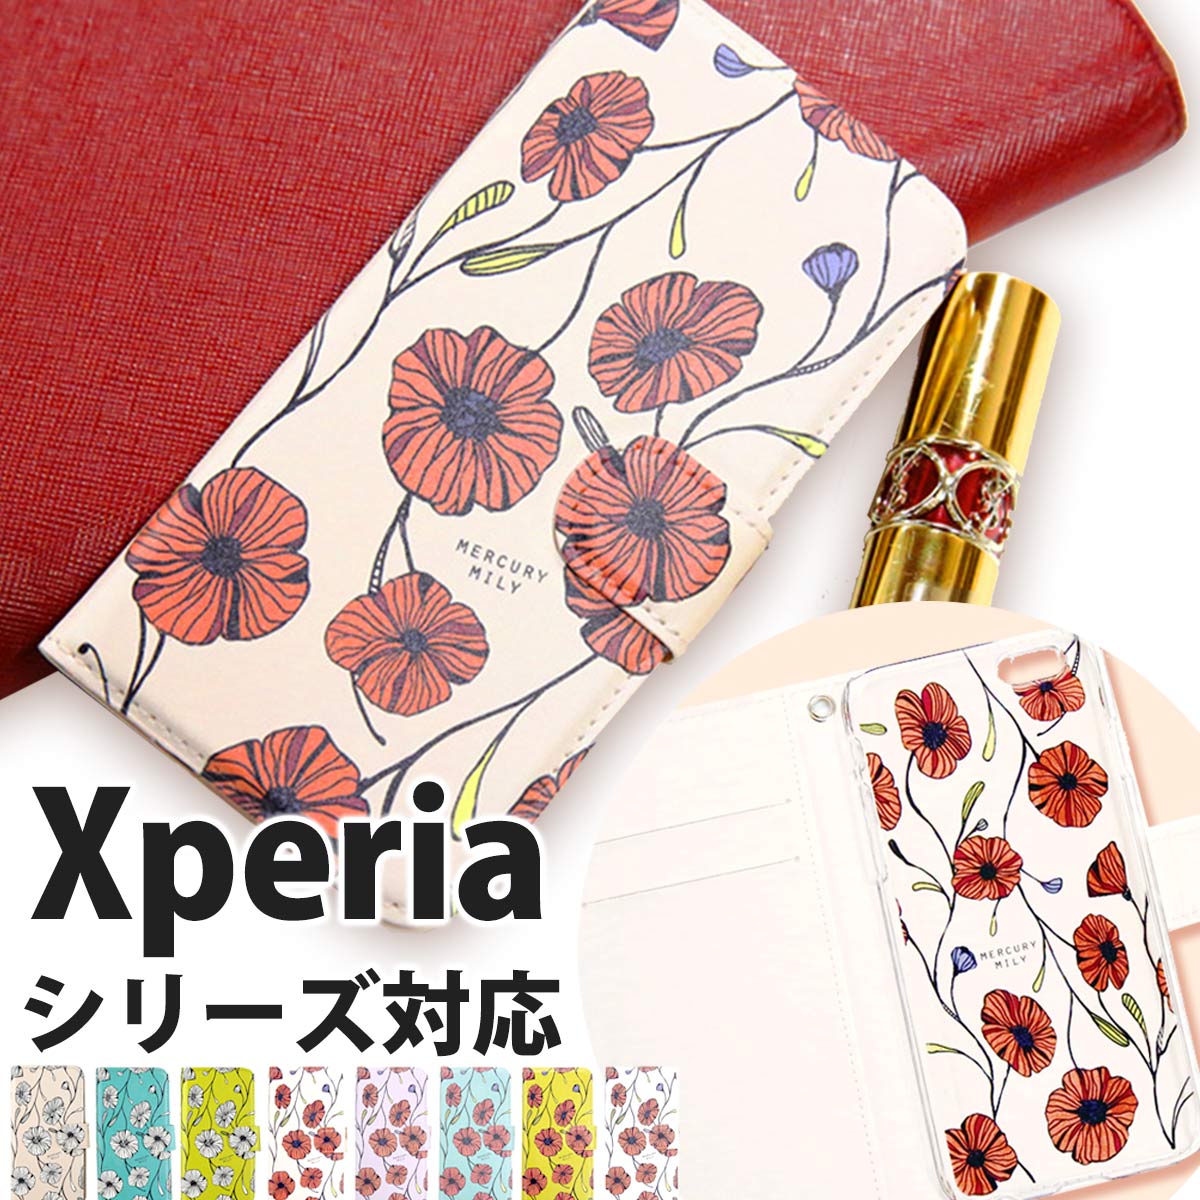 Xperia Z2 SO-03F ケース 大人女子 大人可愛い 可愛い カバー カード収納 花柄 おしゃれ かわいい 品質満点 【GINGER掲載商品】 ブランド ハンドメイドケース